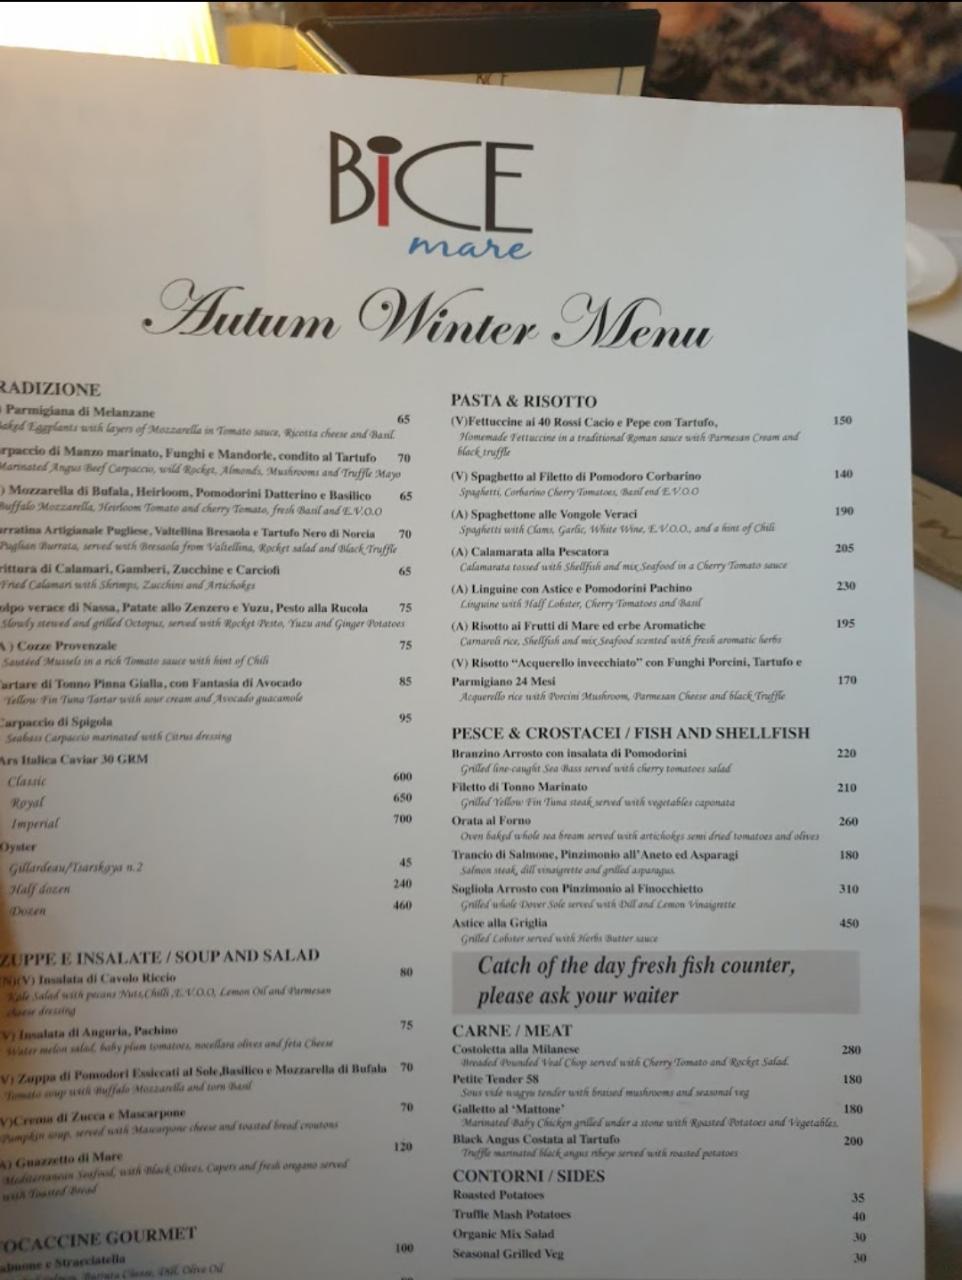 Bice Mare Restaurant menu